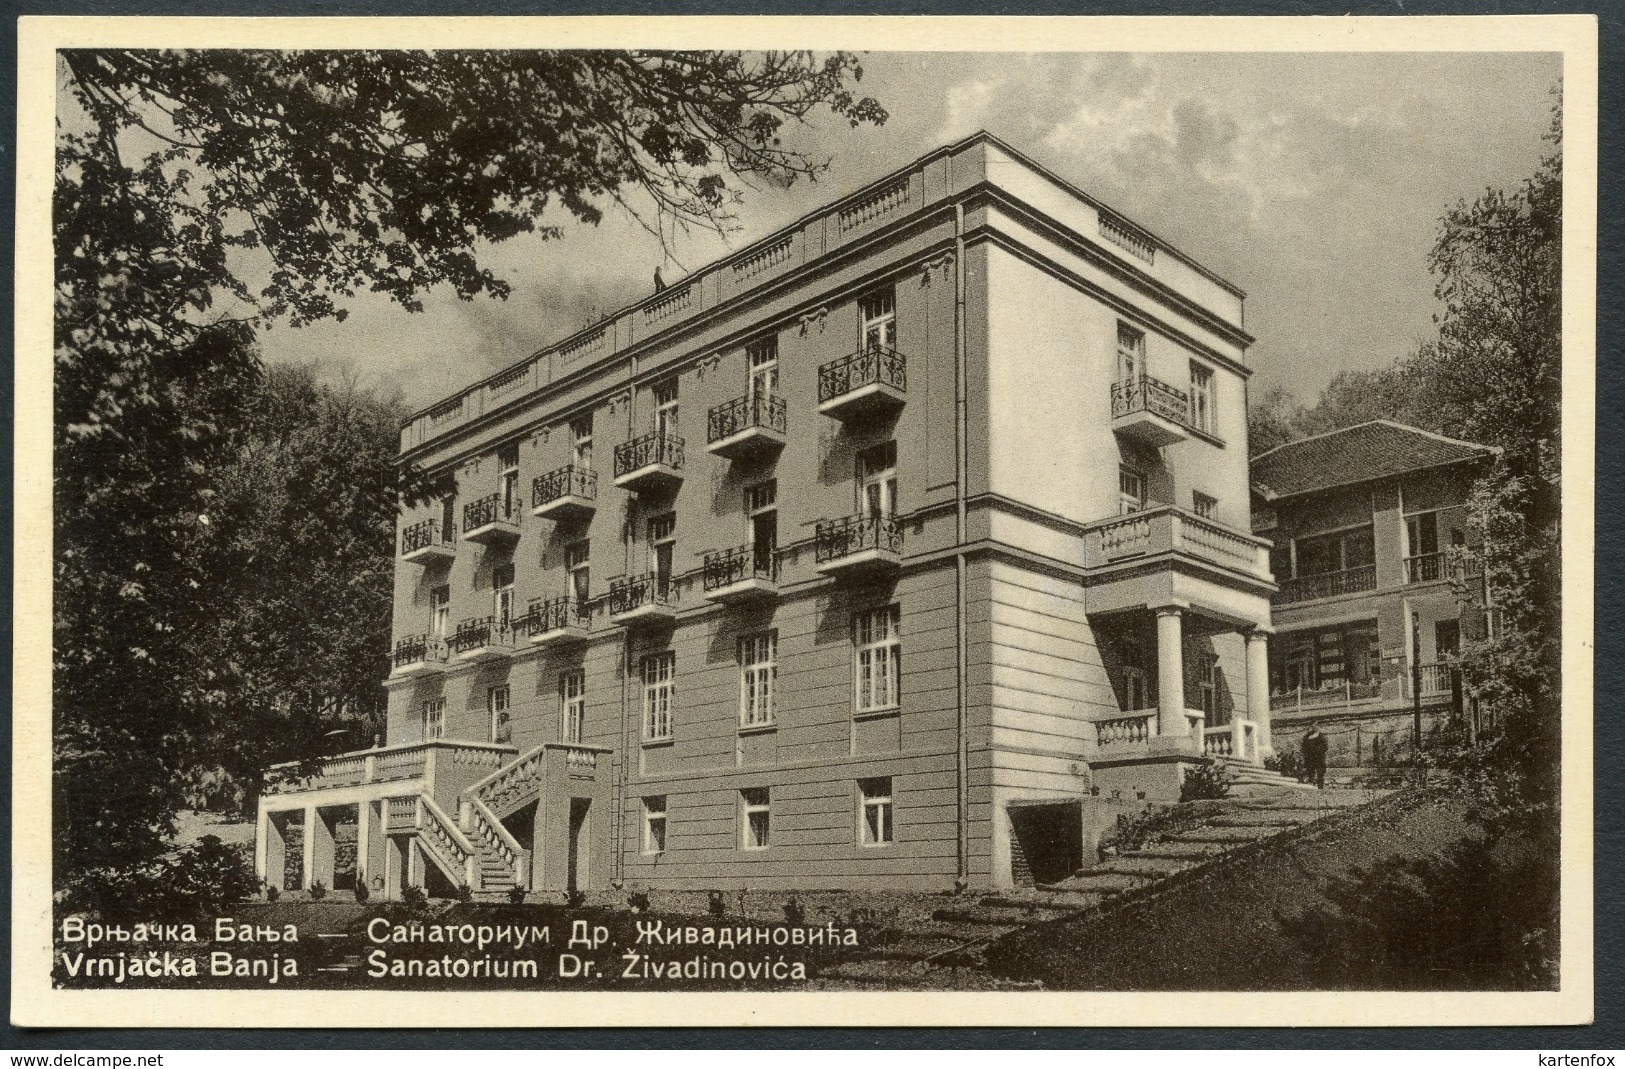 Vrnjacka Banja,  Sanatorium Dr. Zivadinovica,  23.10.1937, Raska, - Serbien